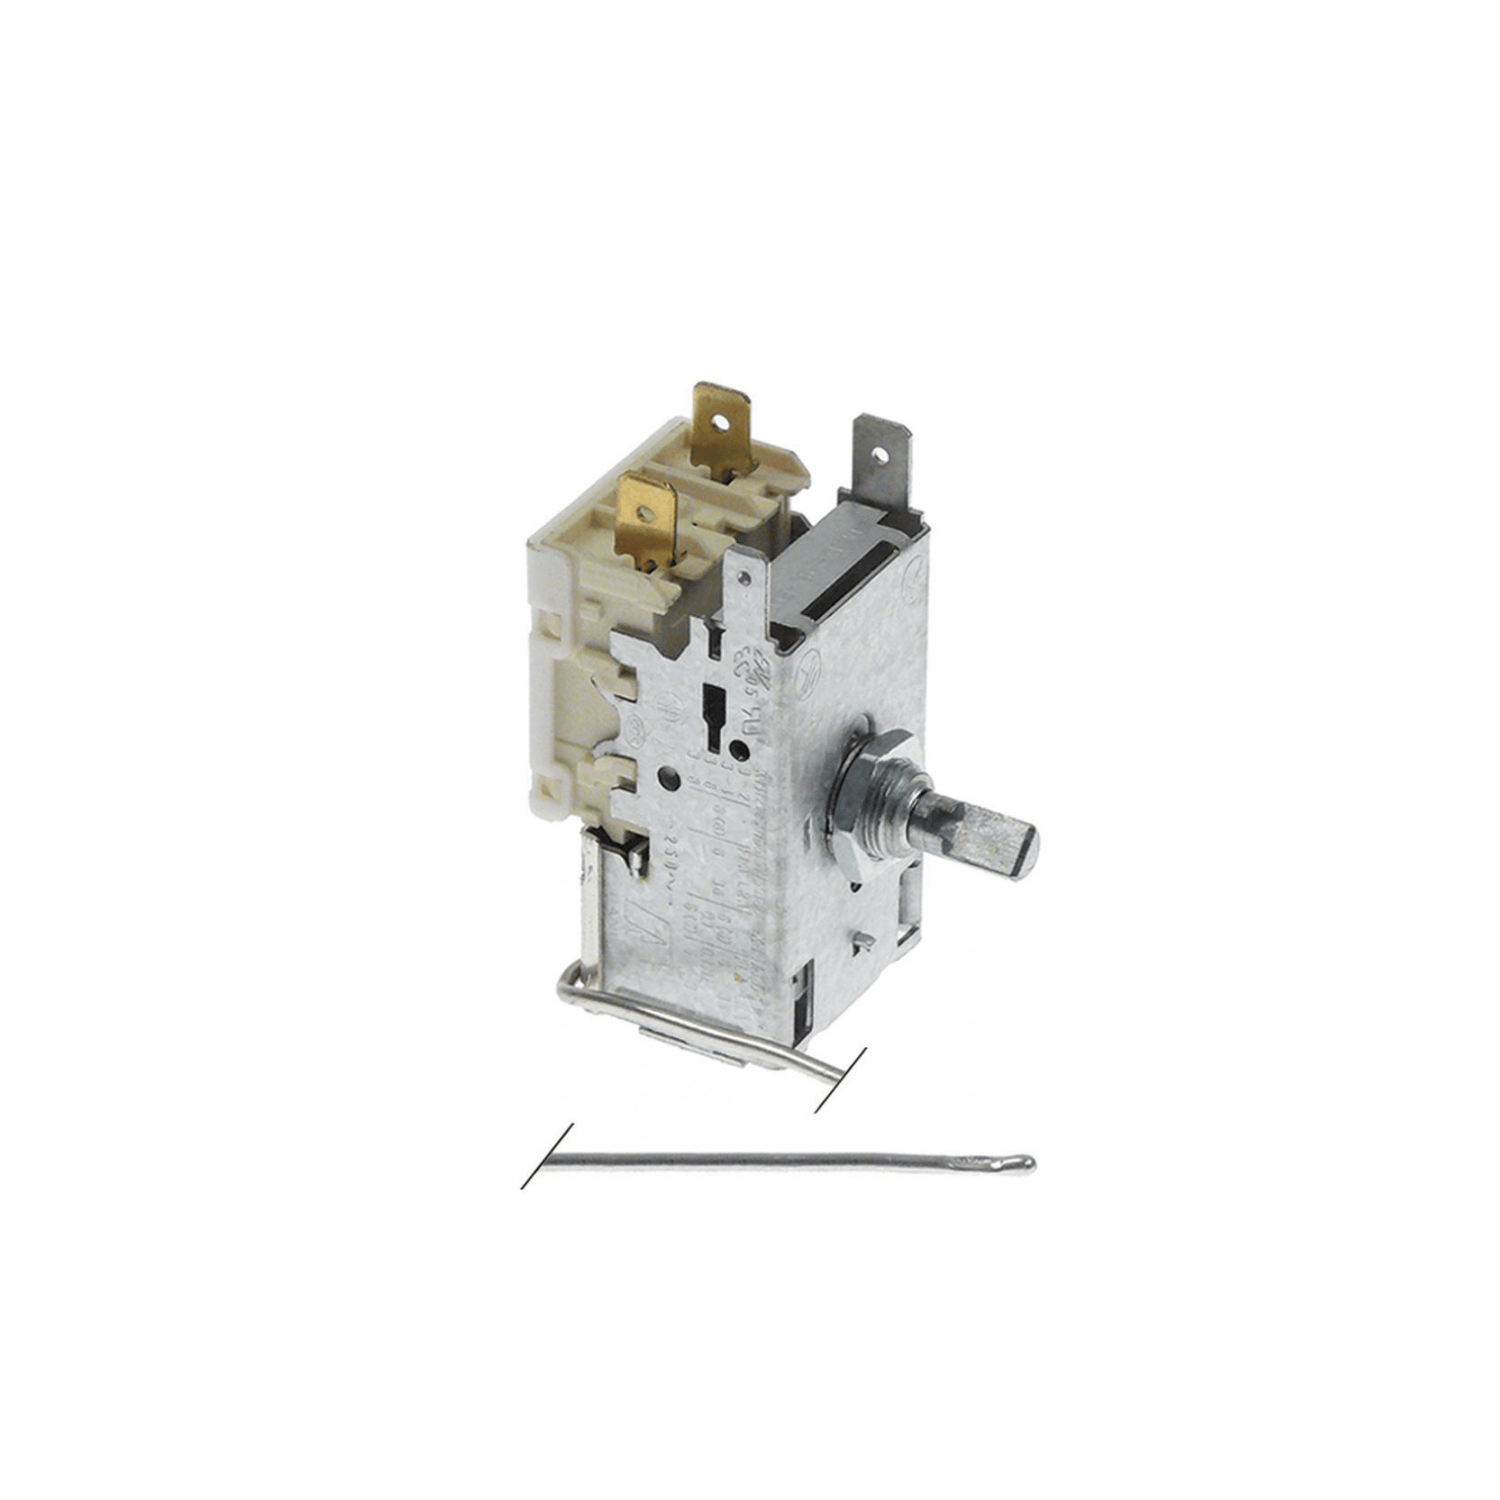 Thermostat RANCO K50B-S3492 Probe ø 2mm Capillary tube 2500mm T warm -19 ° C T cold -26 ° C